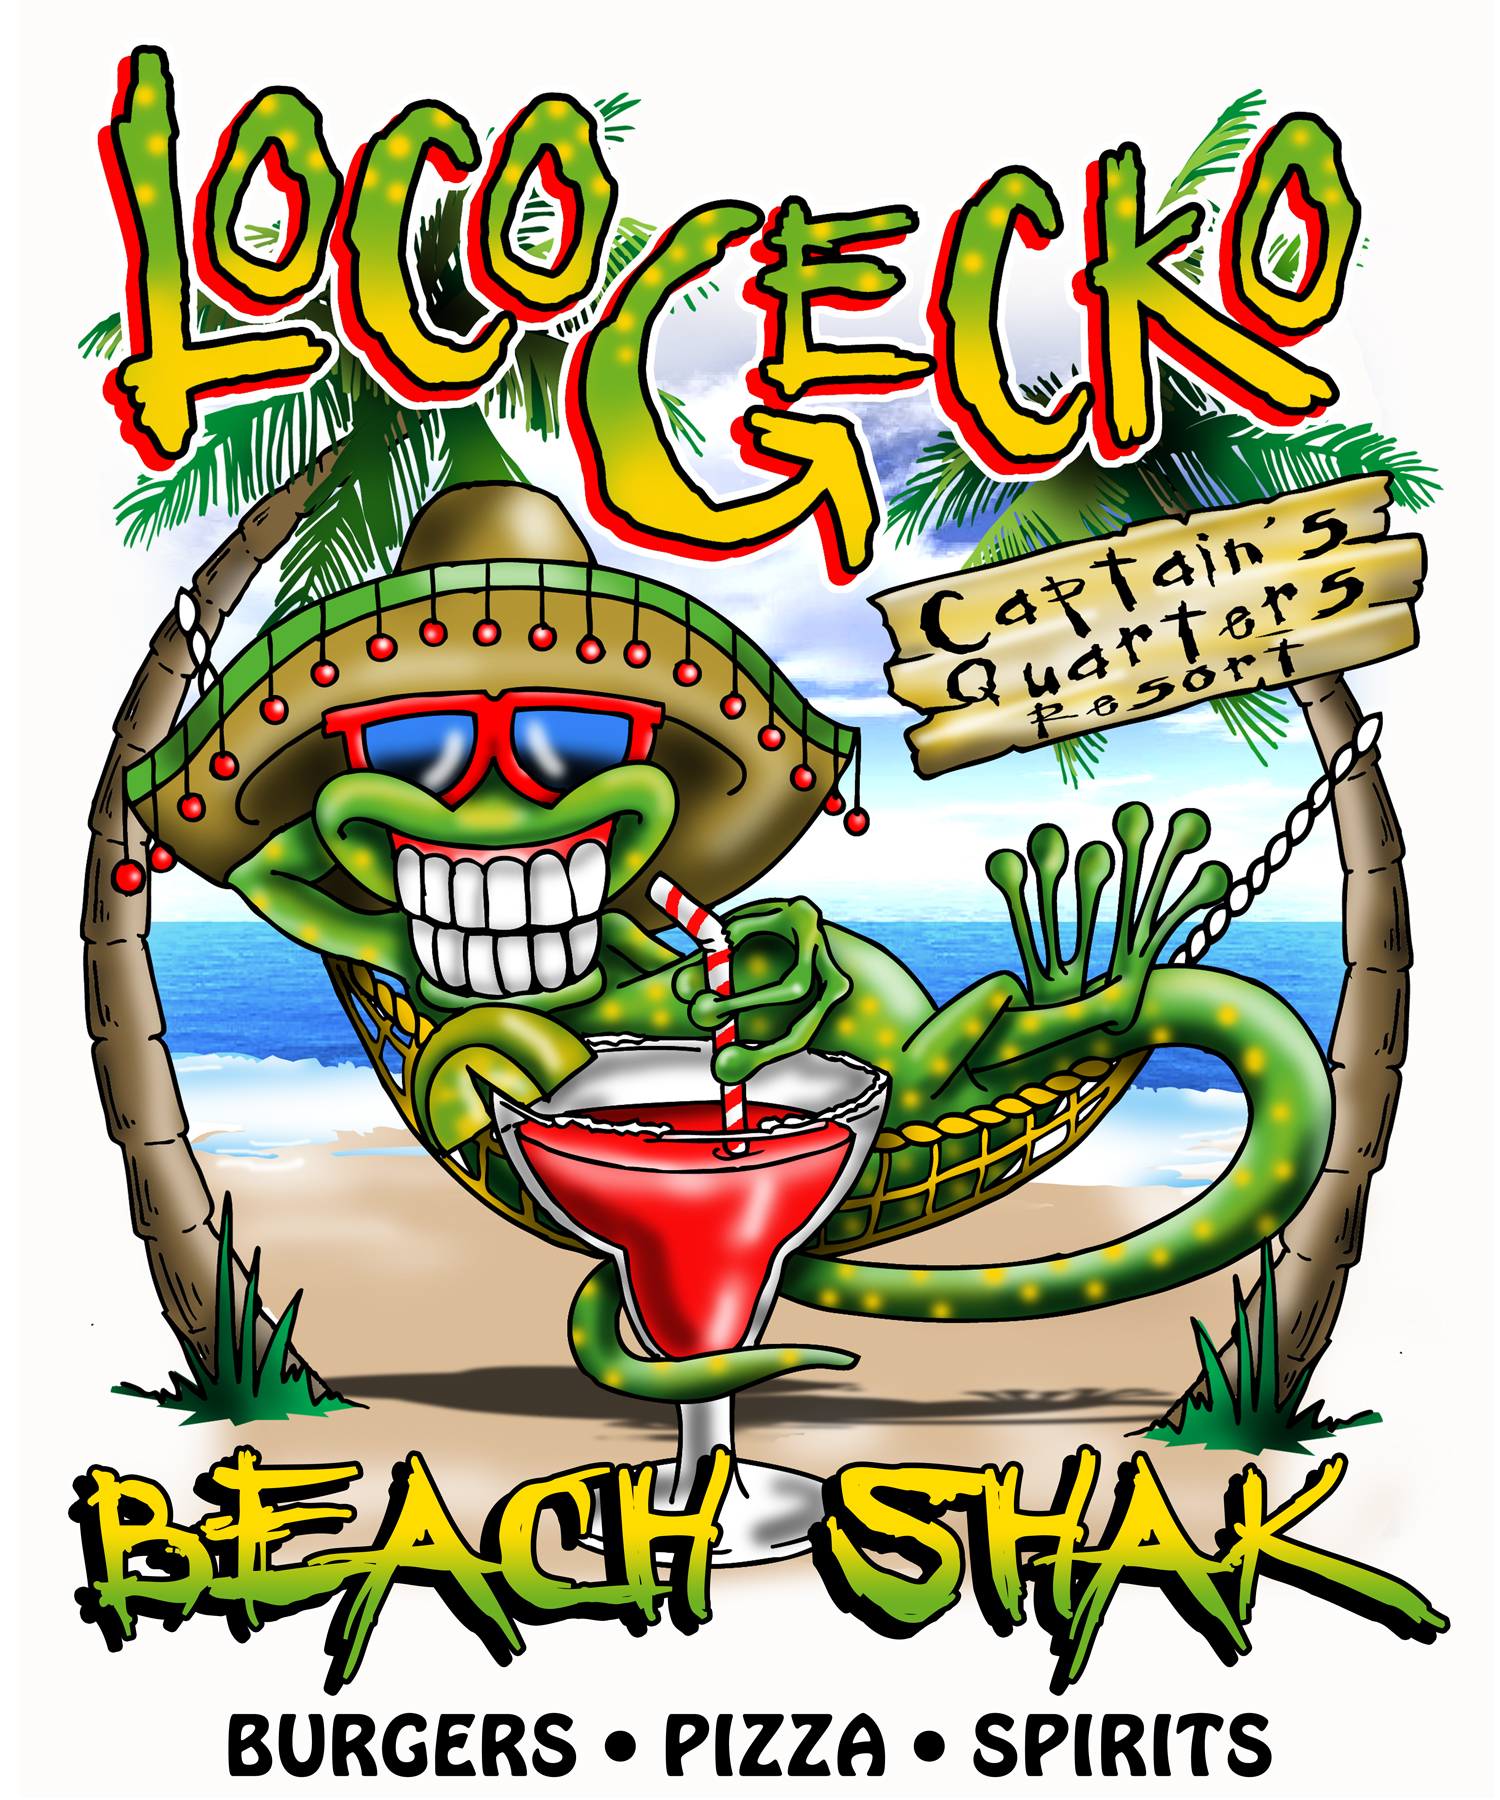 Loco Gecko - Captain’s Quarters Location